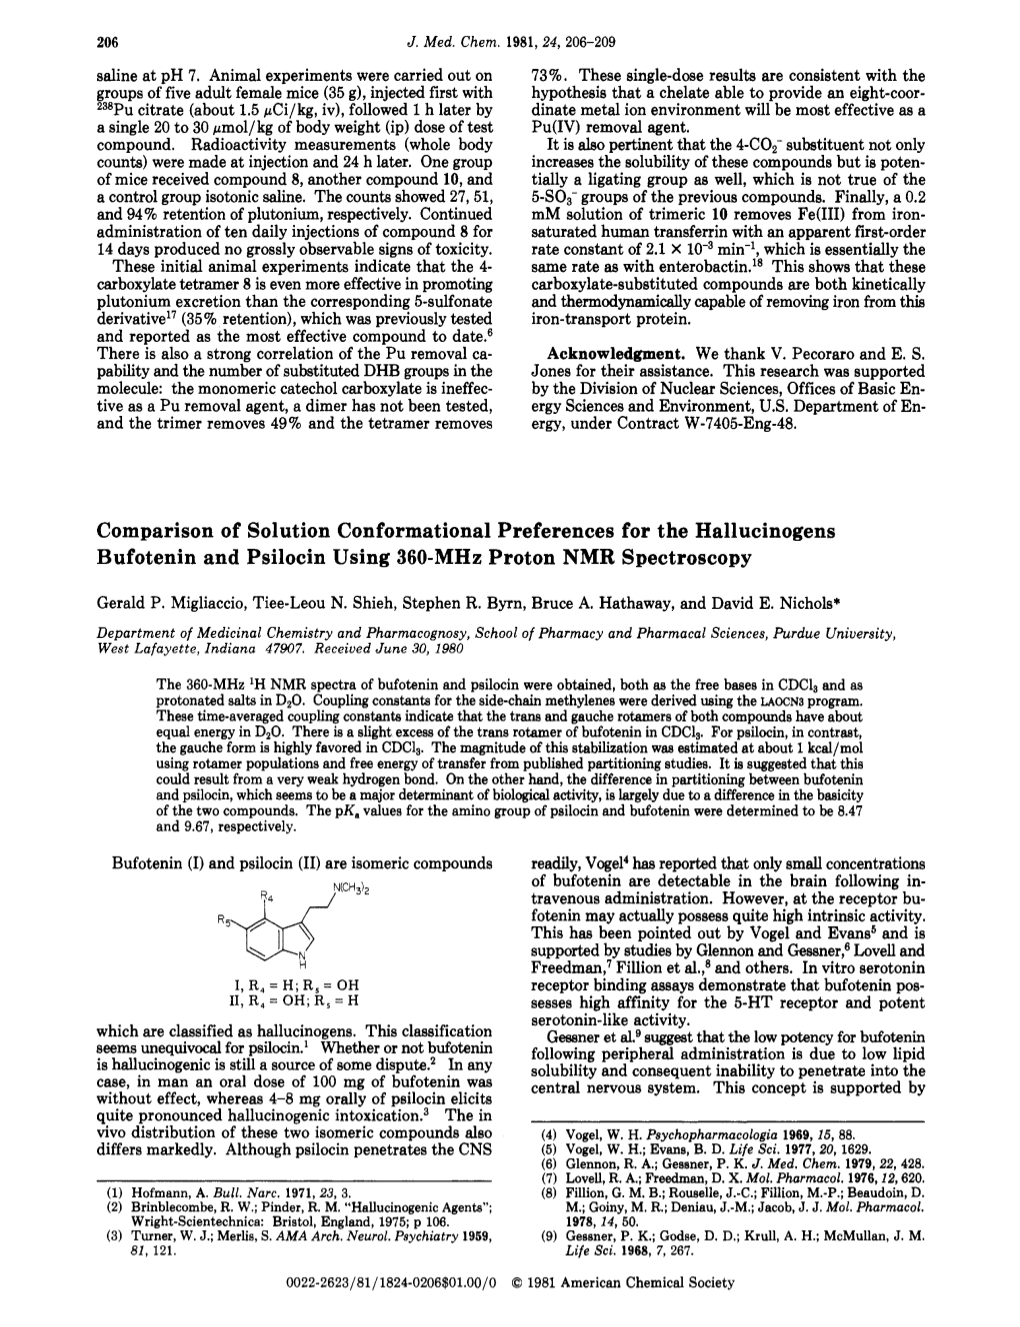 Comparison of Solution Conformational Preferences for the Hallucinogens Bufotenin and Psilocin Using 360-Mhz Proton NMR Spectroscopy